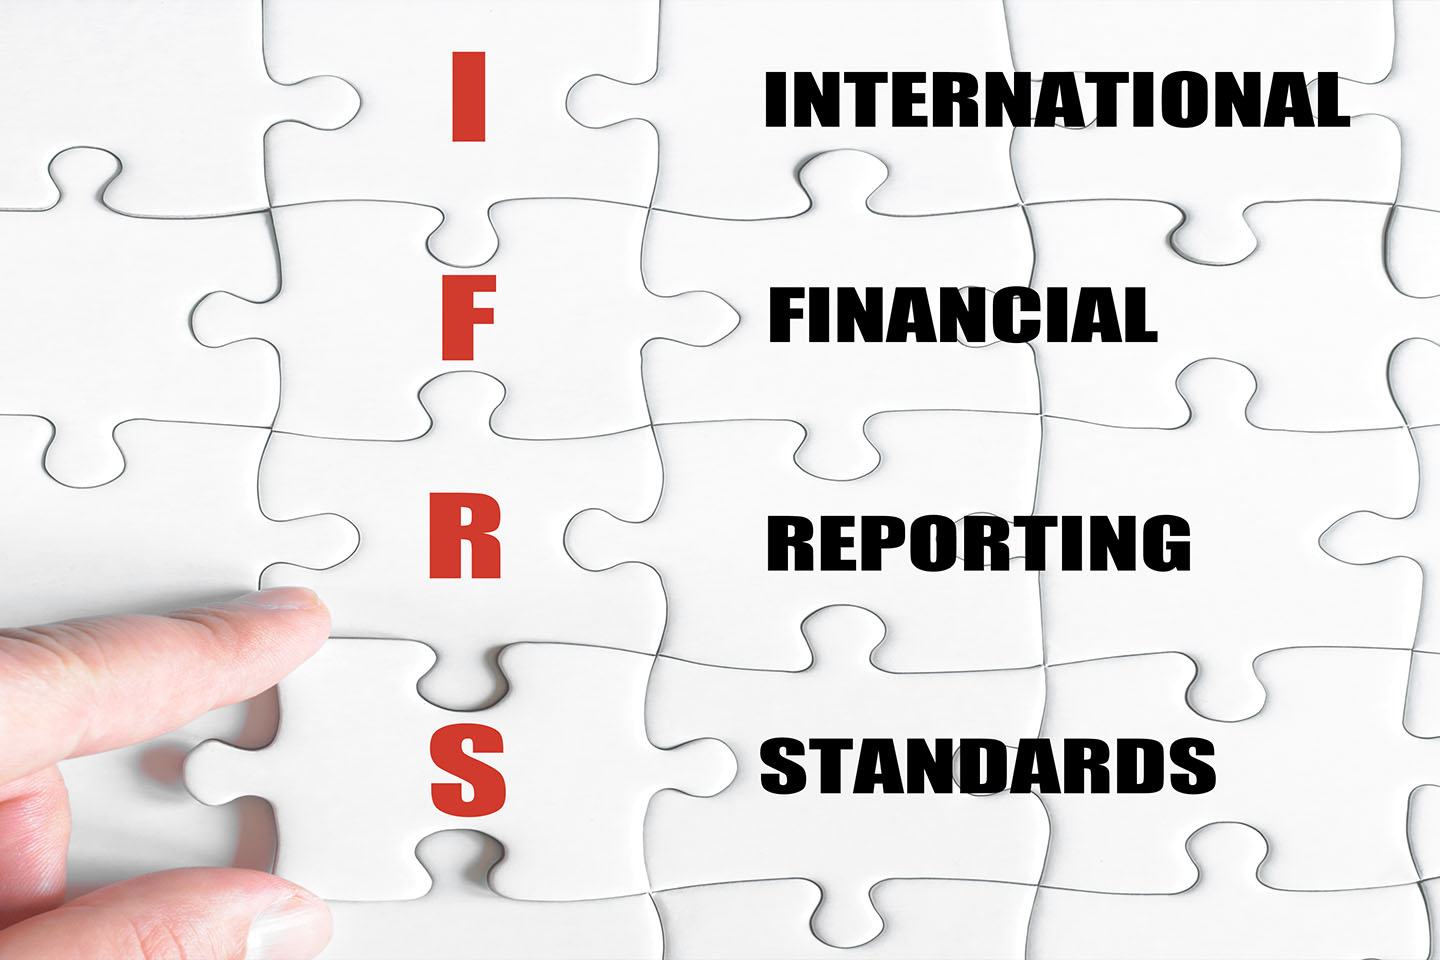  International Financial Reporting Standards